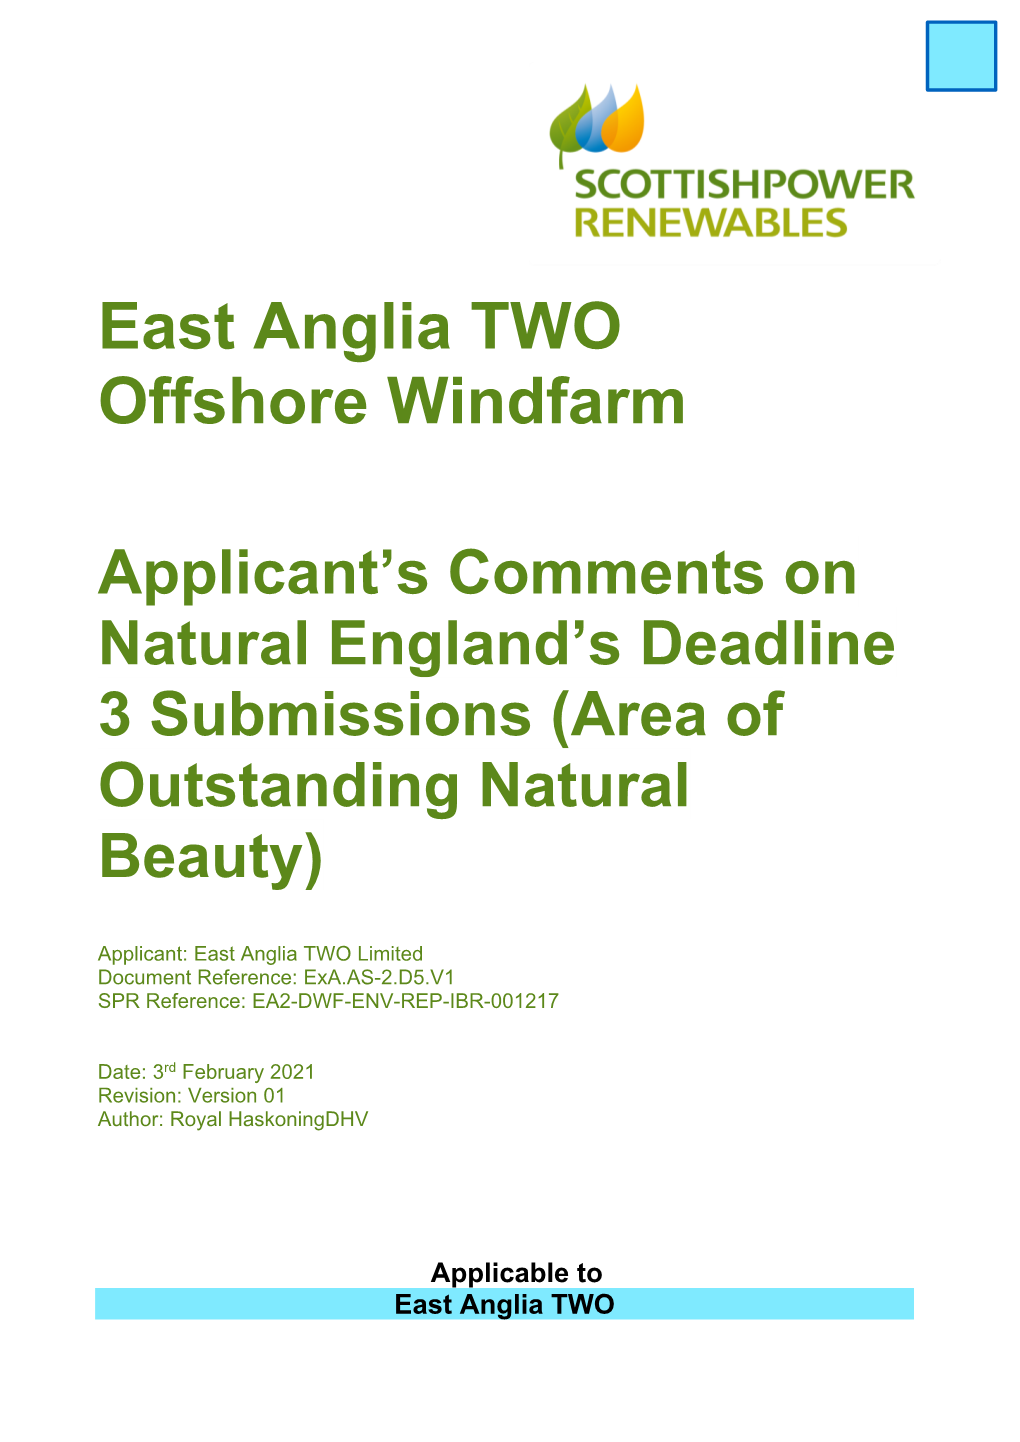 East Anglia TWO Offshore Windfarm